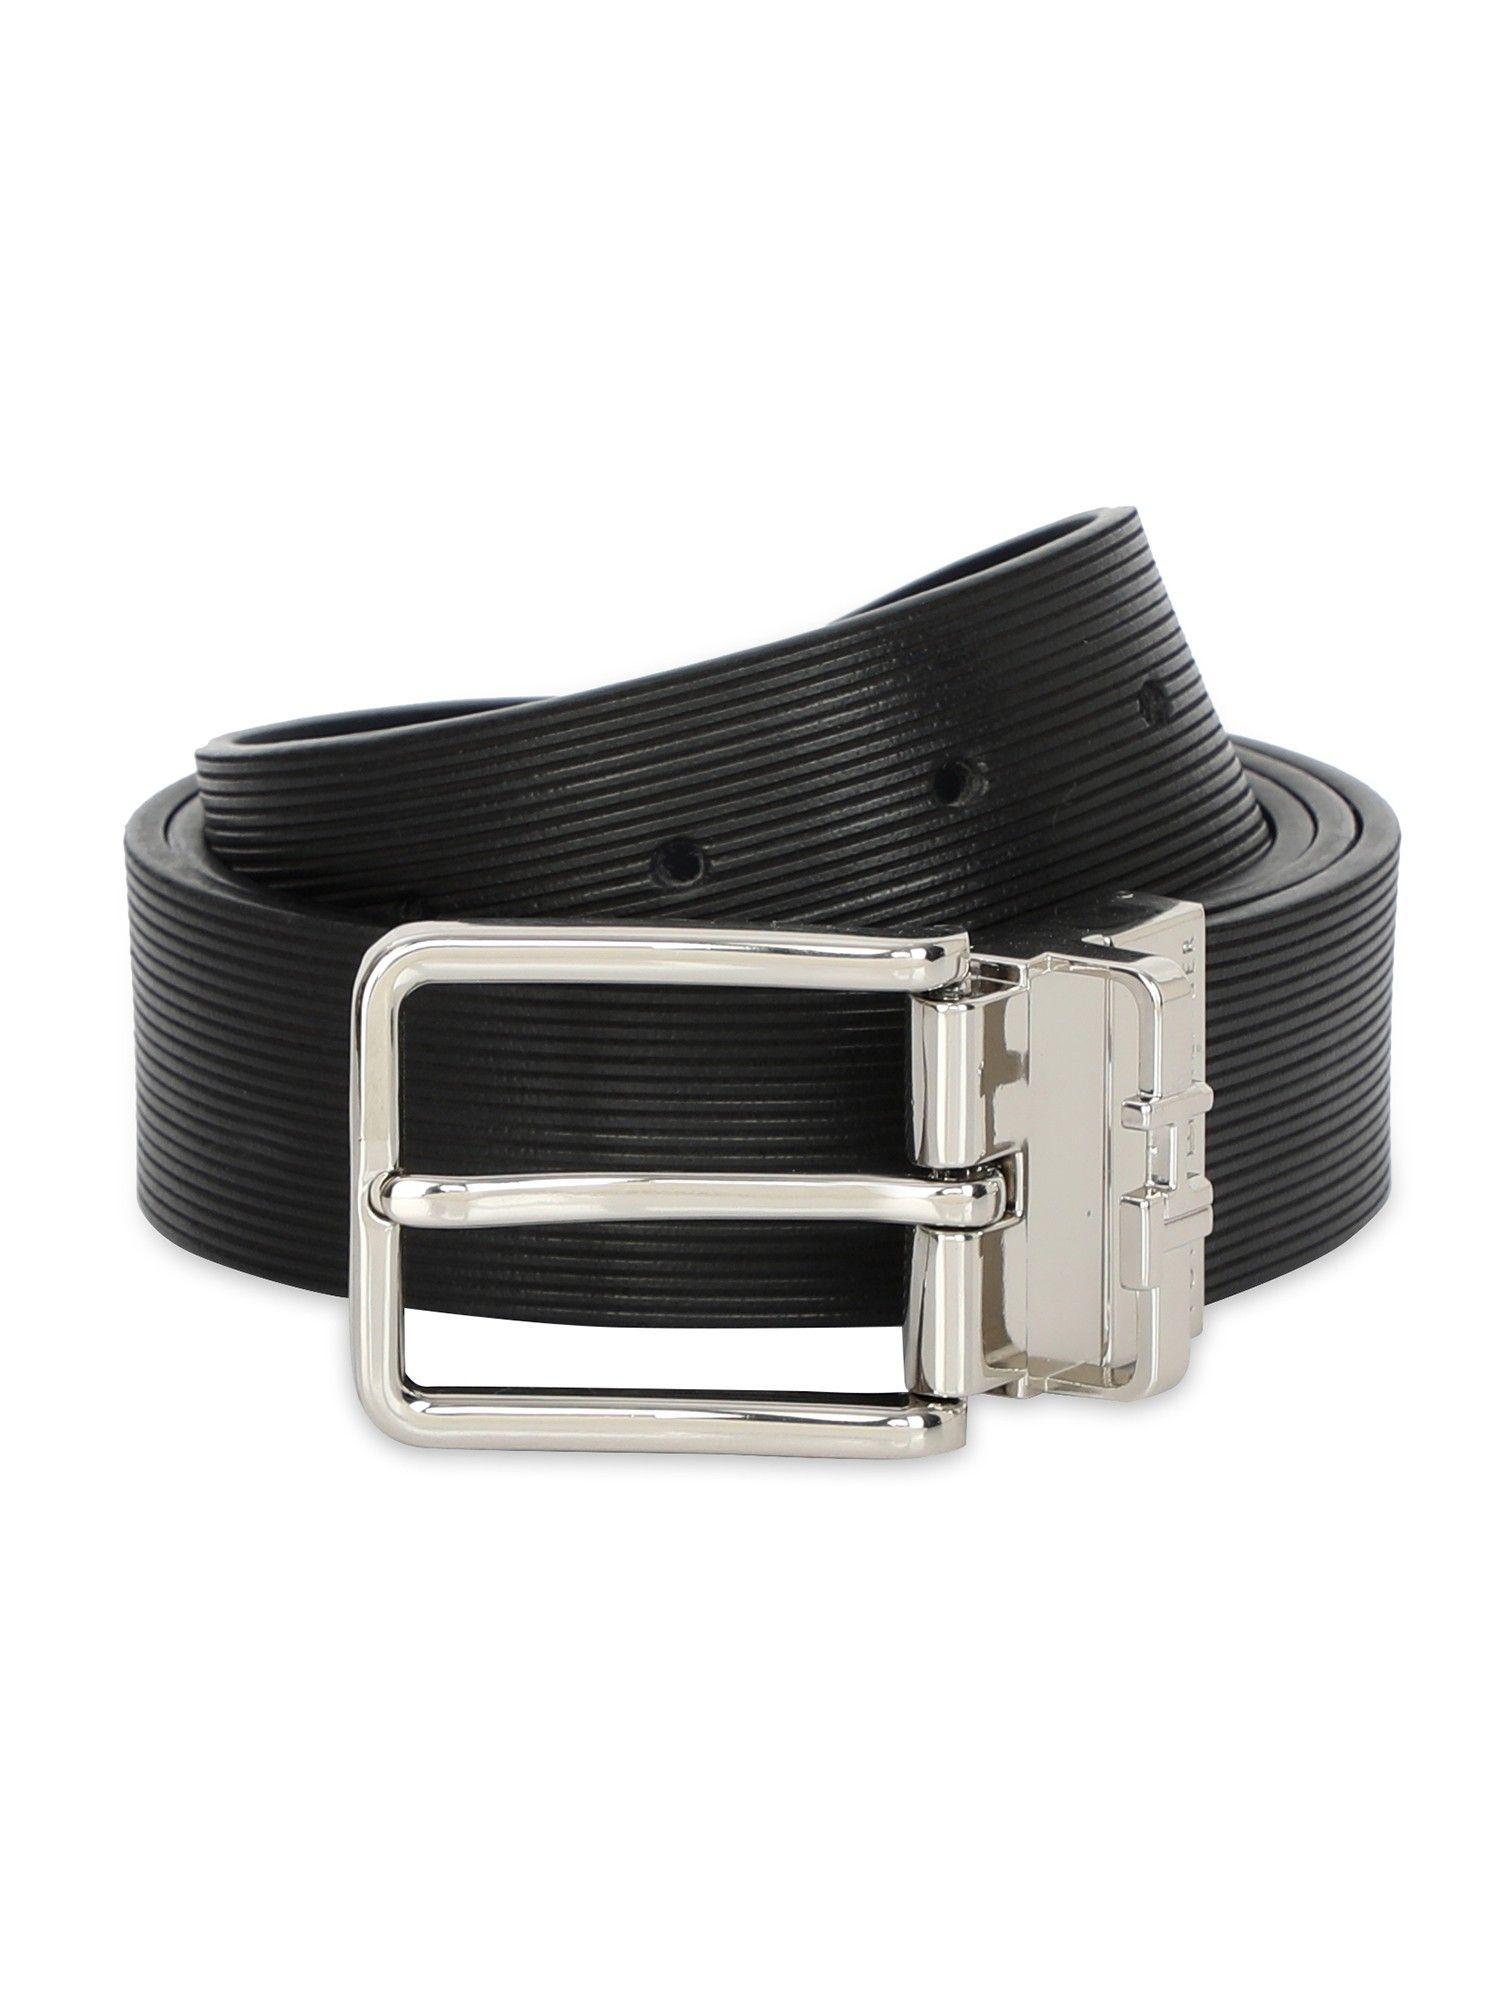 morley mens leather reversible belt textured black & navy